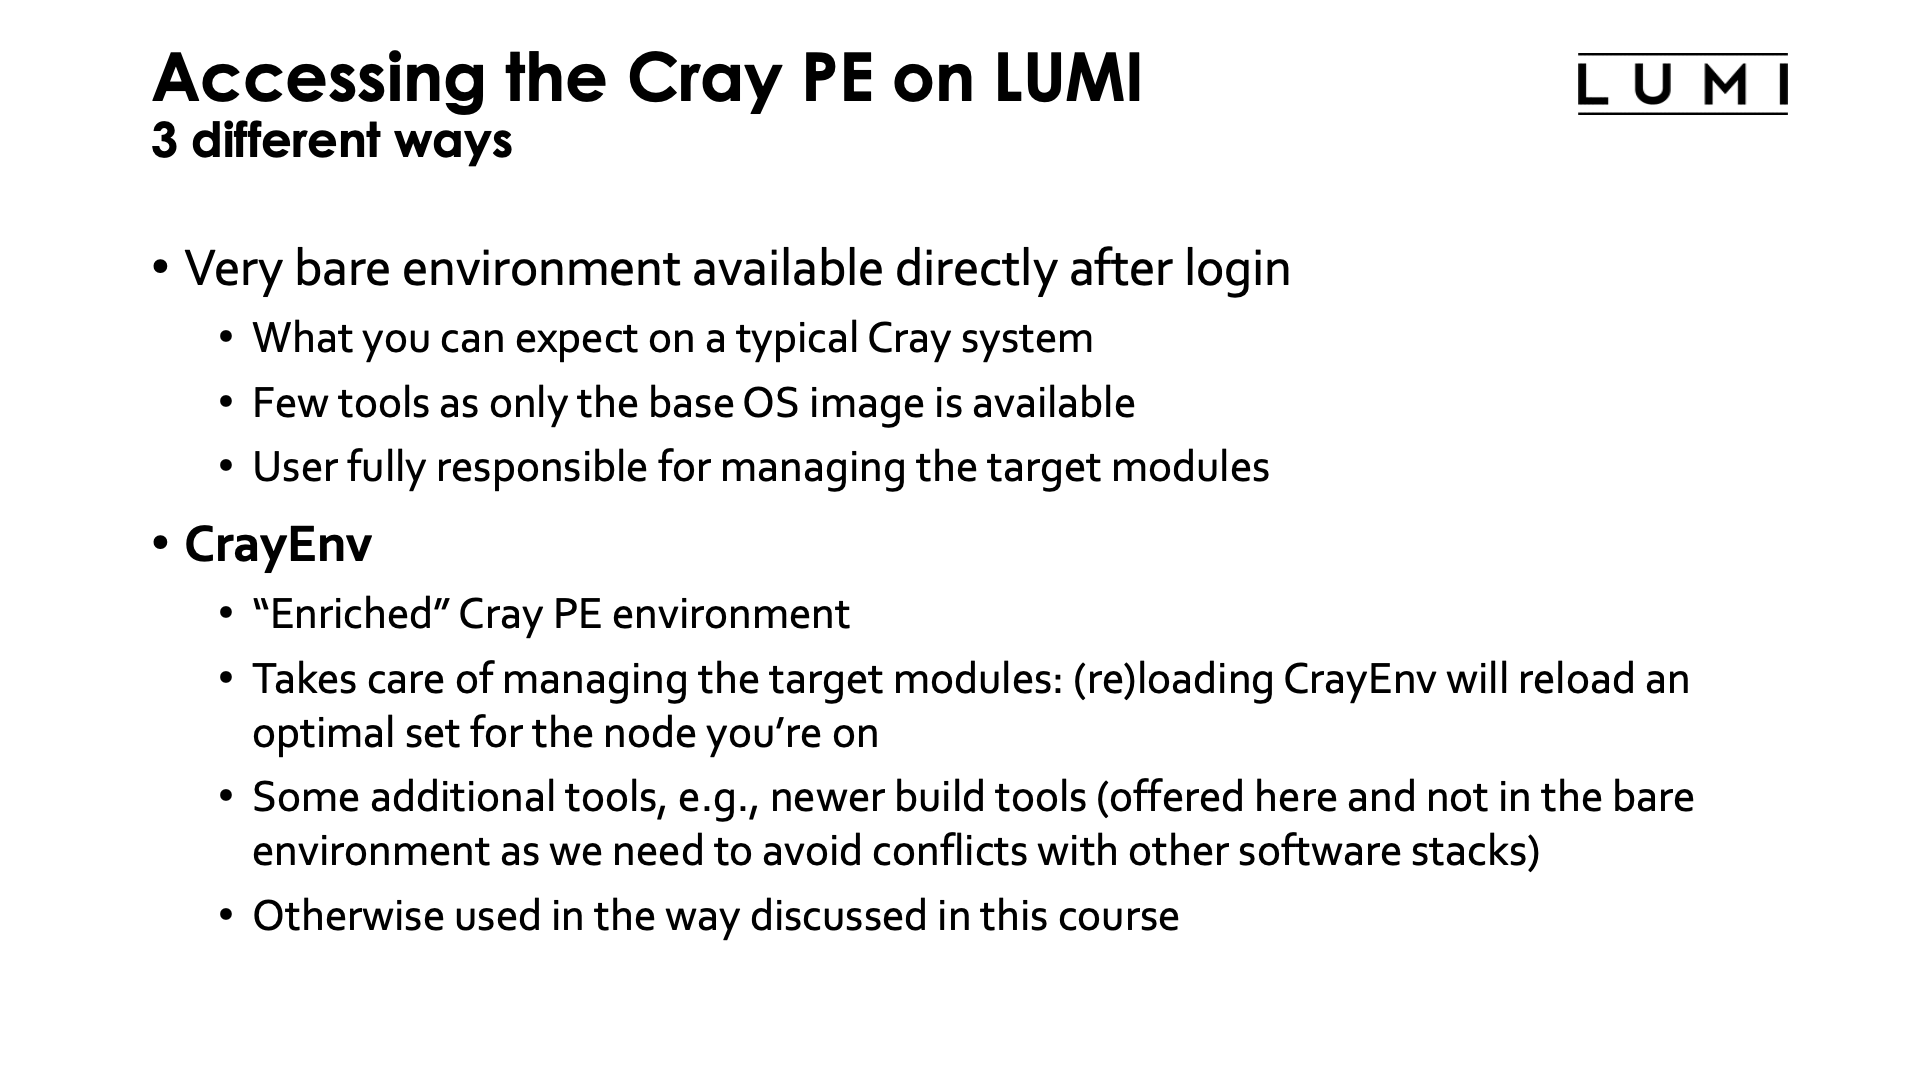 Accessing the Cray PE on LUMI slide 1